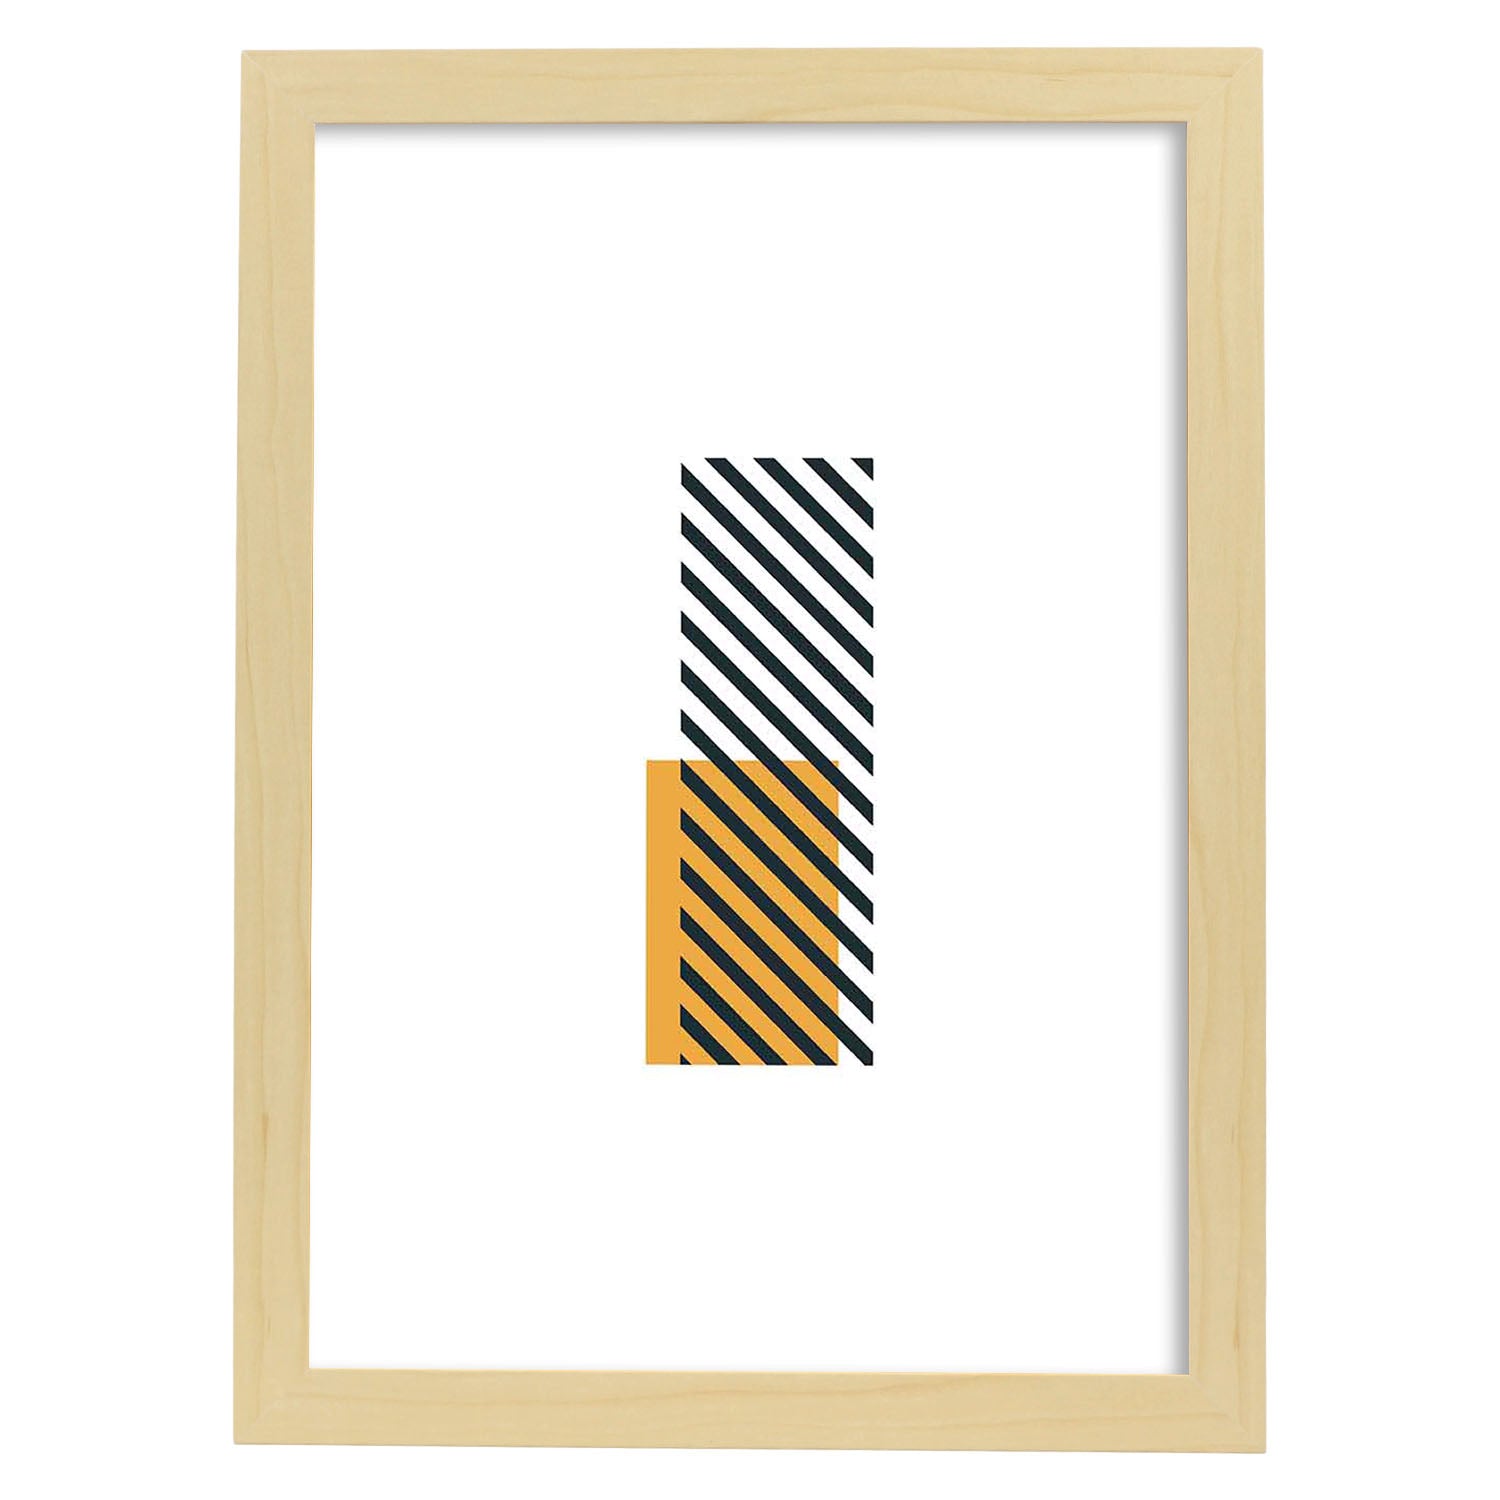 Poster de letra I. Lámina estilo Geometria con imágenes del alfabeto.-Artwork-Nacnic-A3-Marco Madera clara-Nacnic Estudio SL